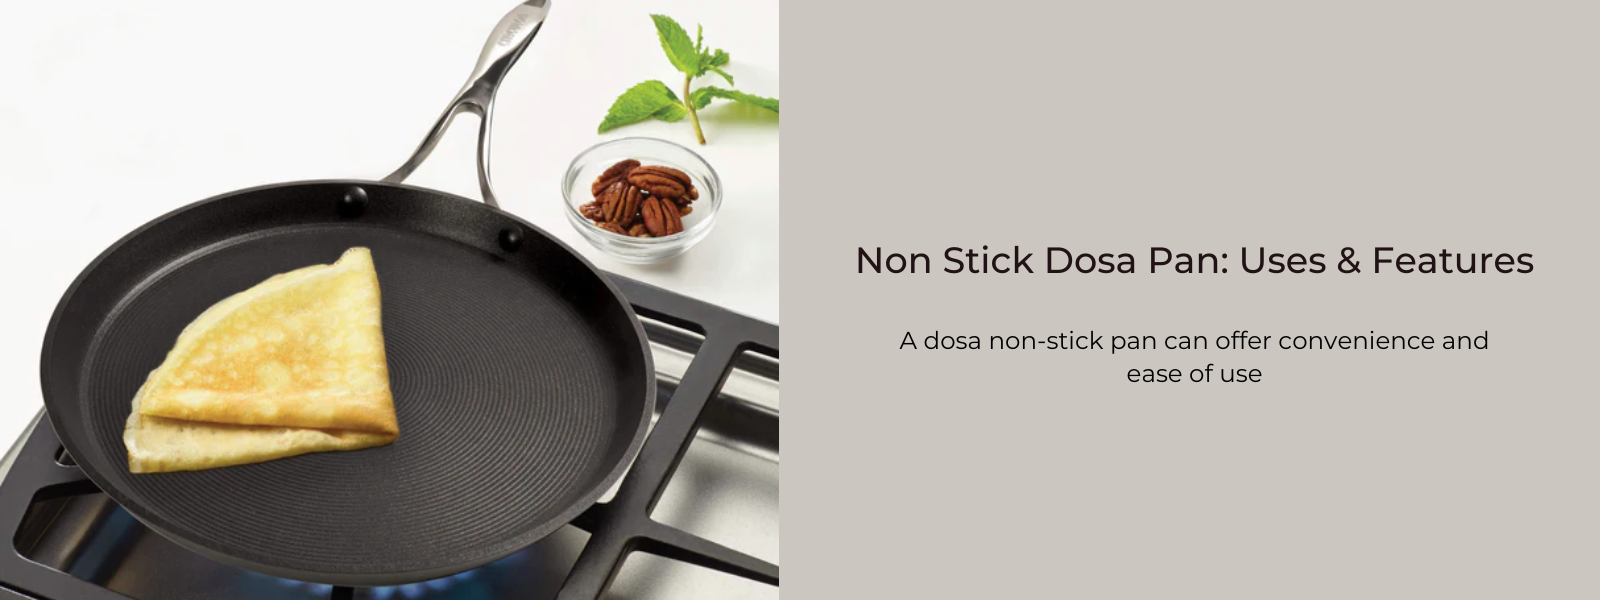 Dosa Non Stick Pan: Important Facts, Uses & Benefits - PotsandPans India